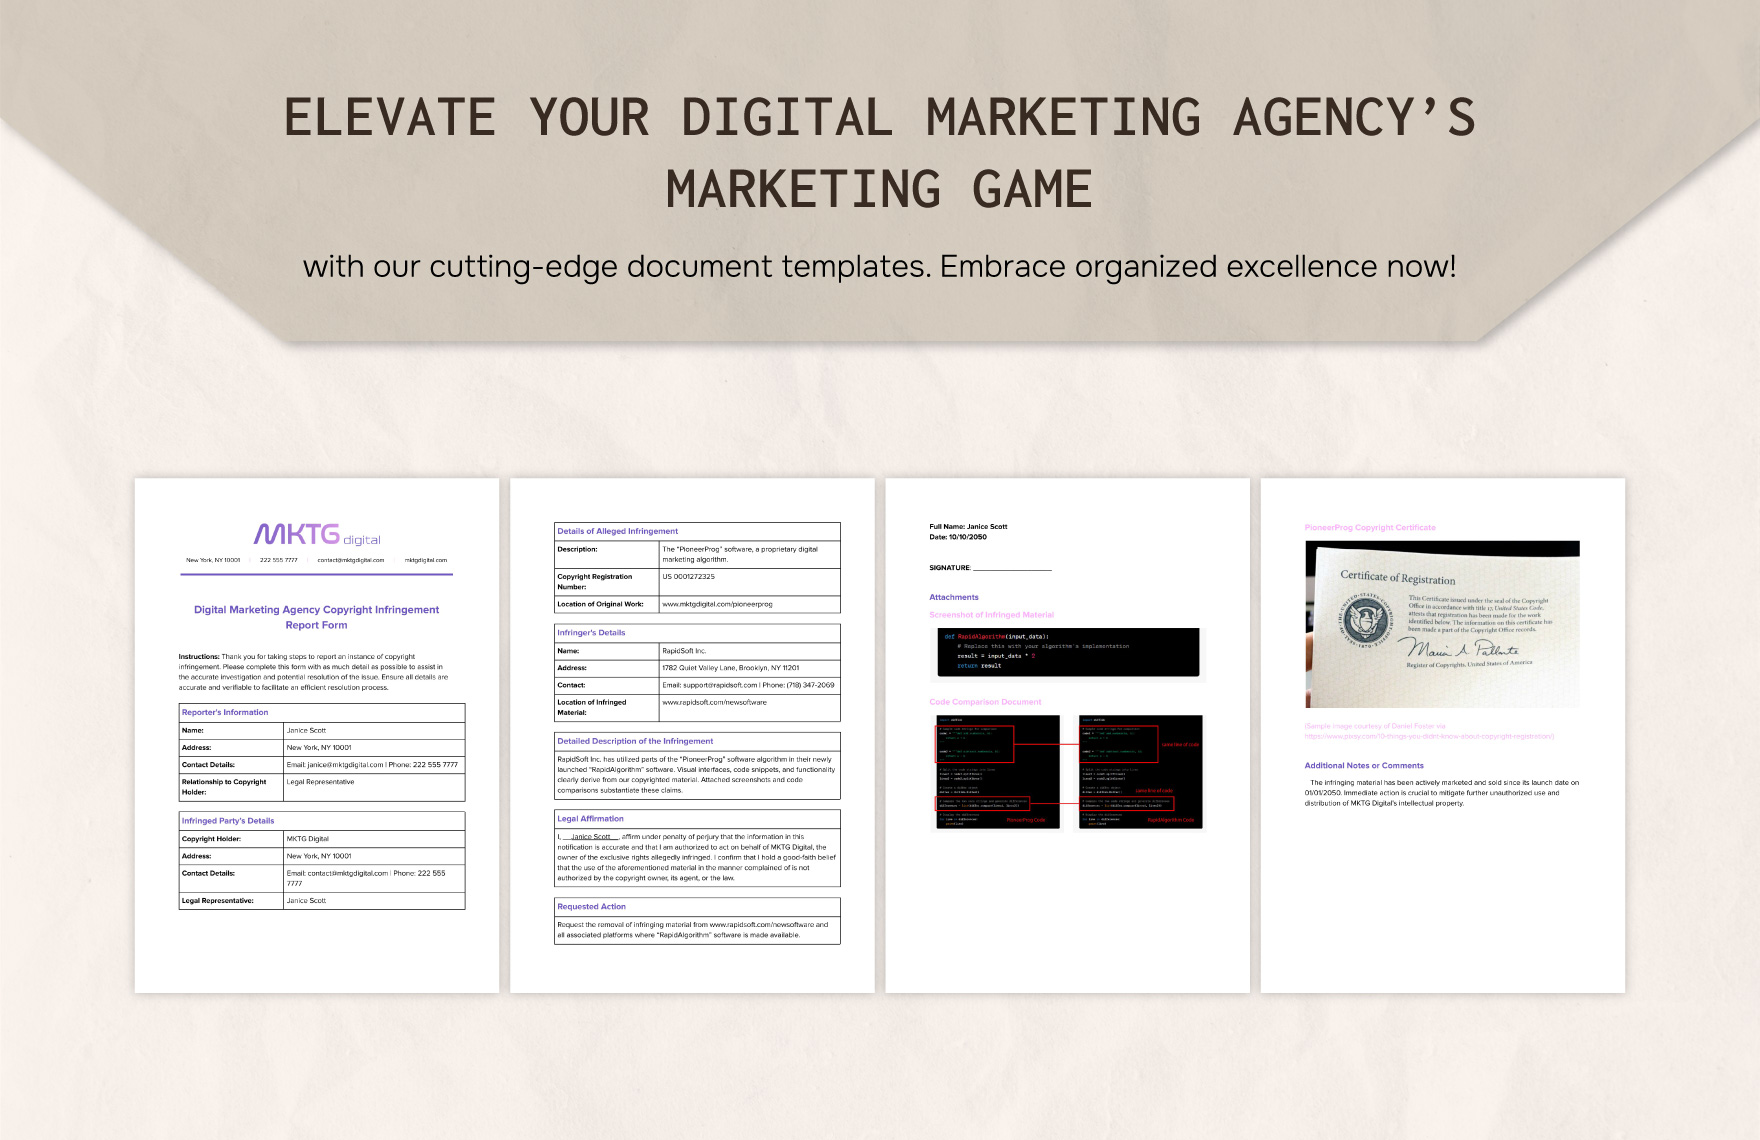 Digital Marketing Agency Copyright Infringement Report Form Template